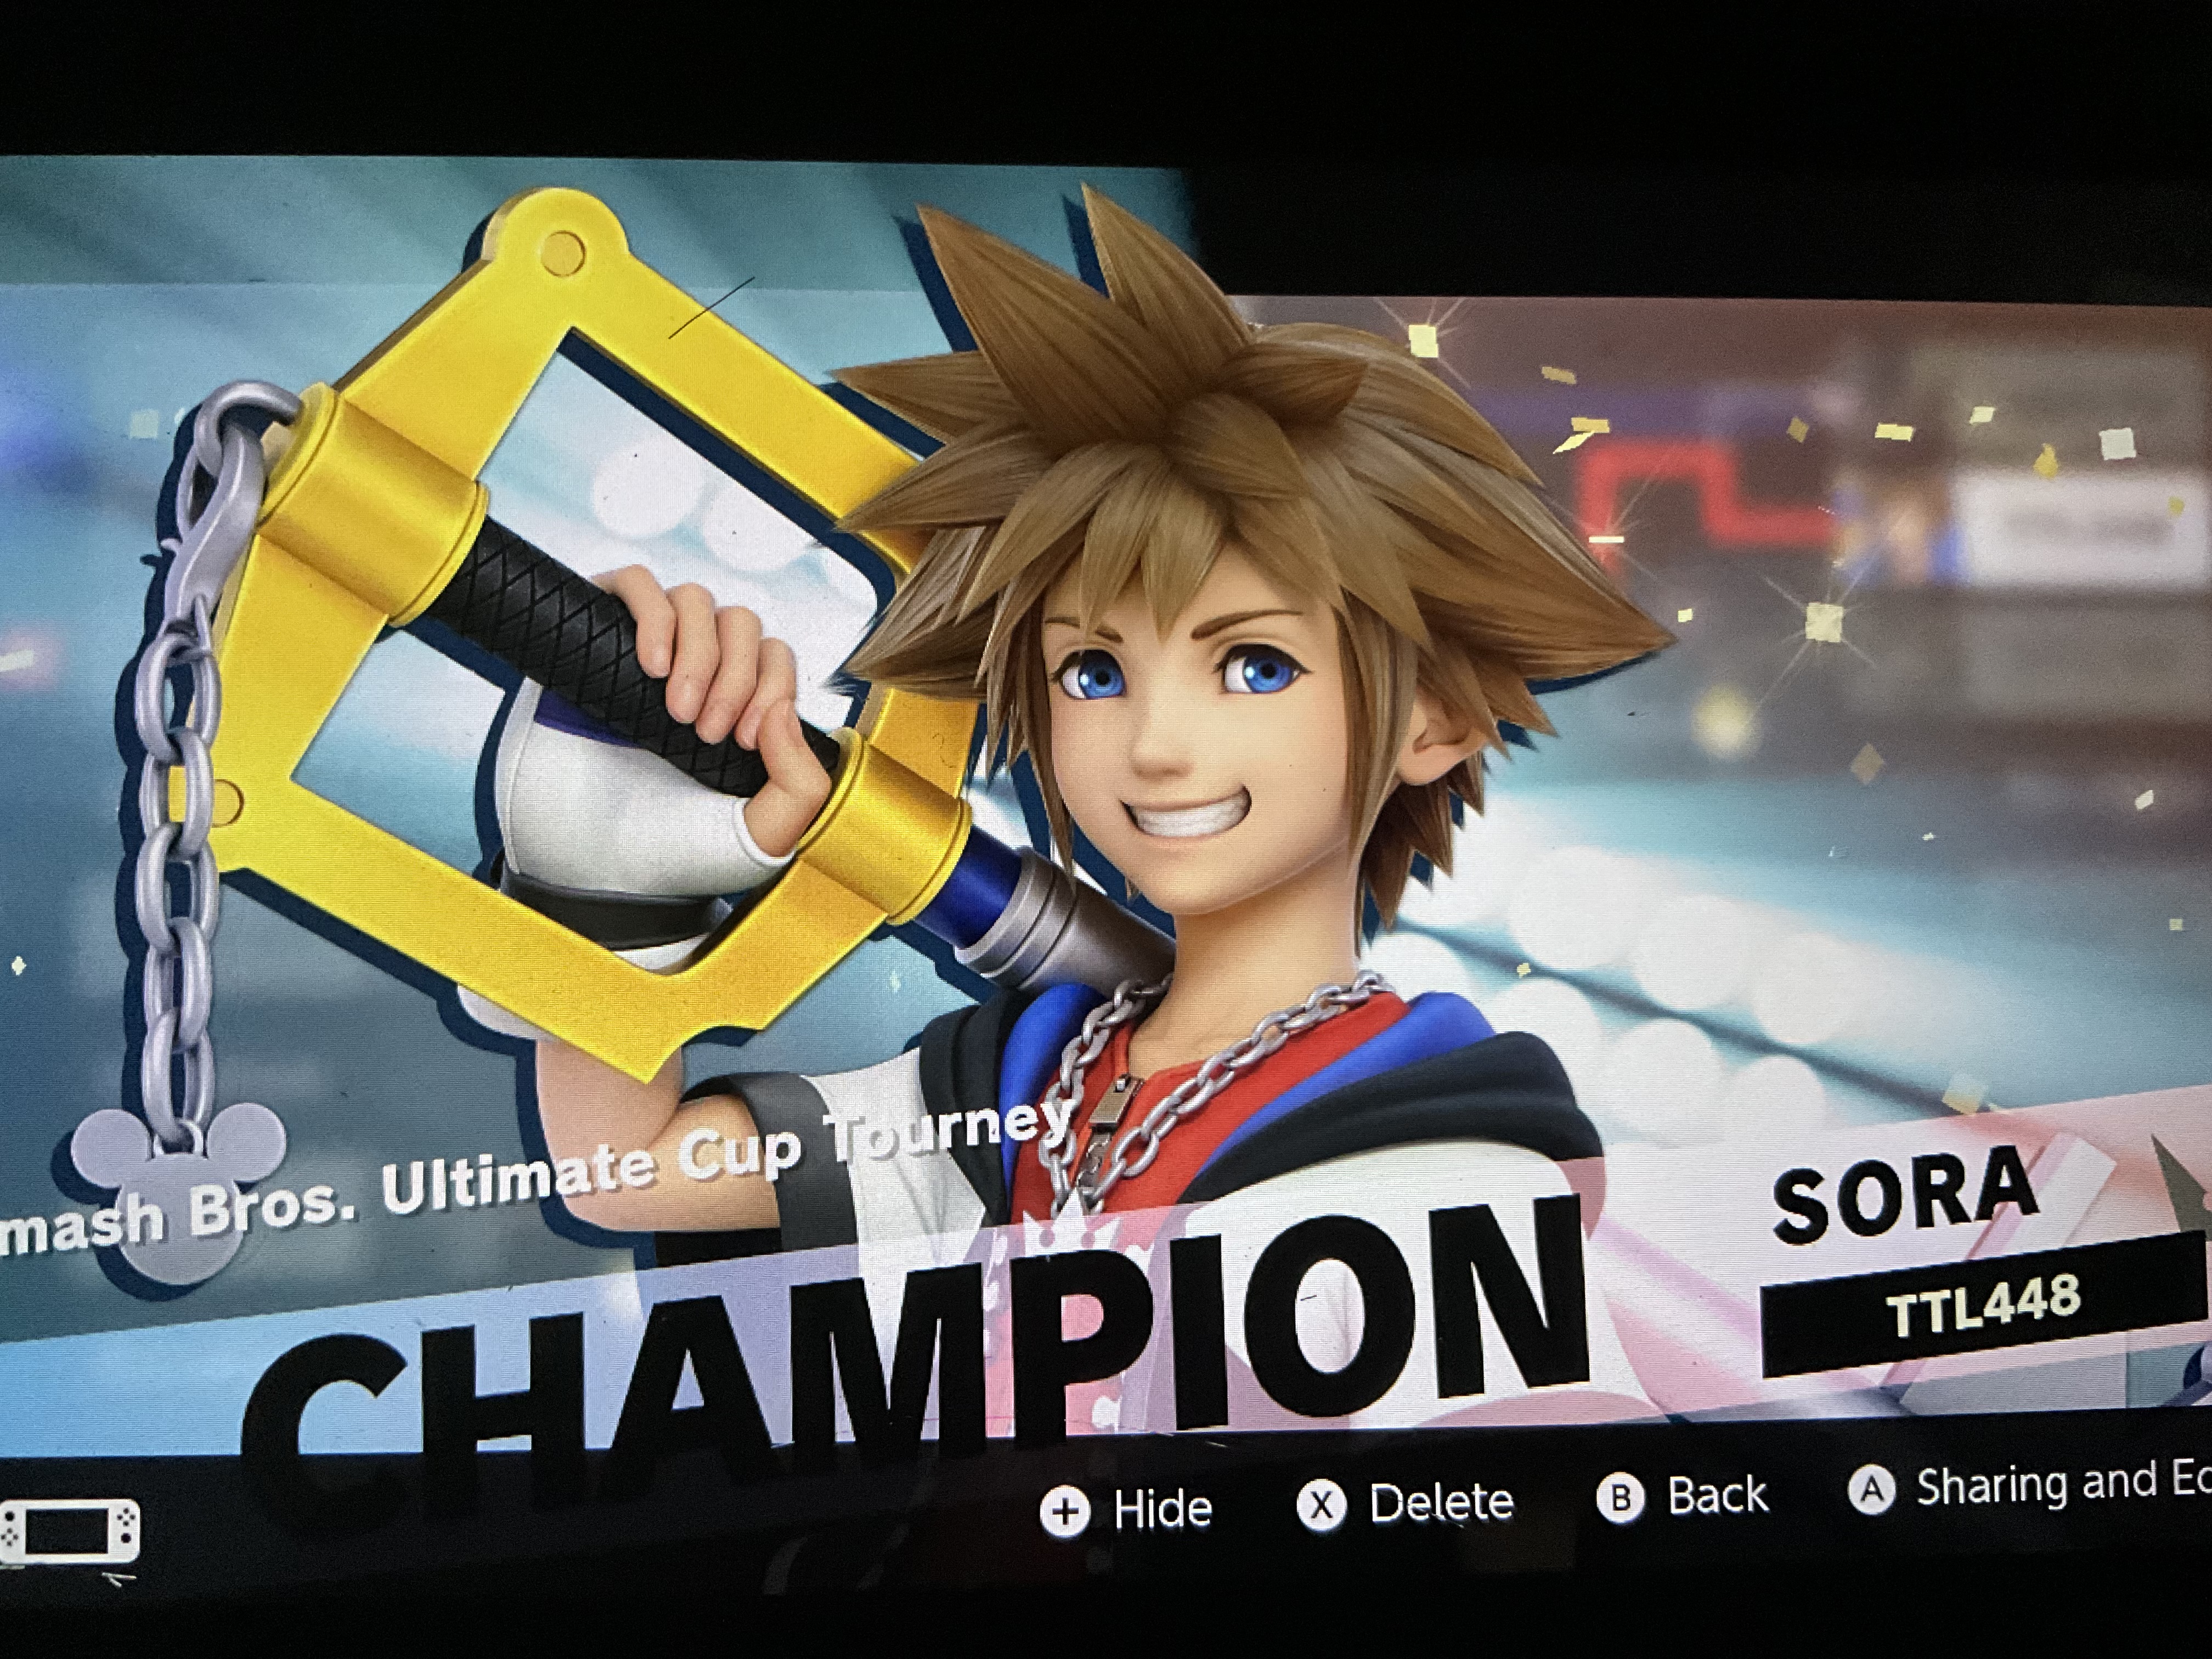 Sora is The Smash Bros Ultimate Tourney Champion!